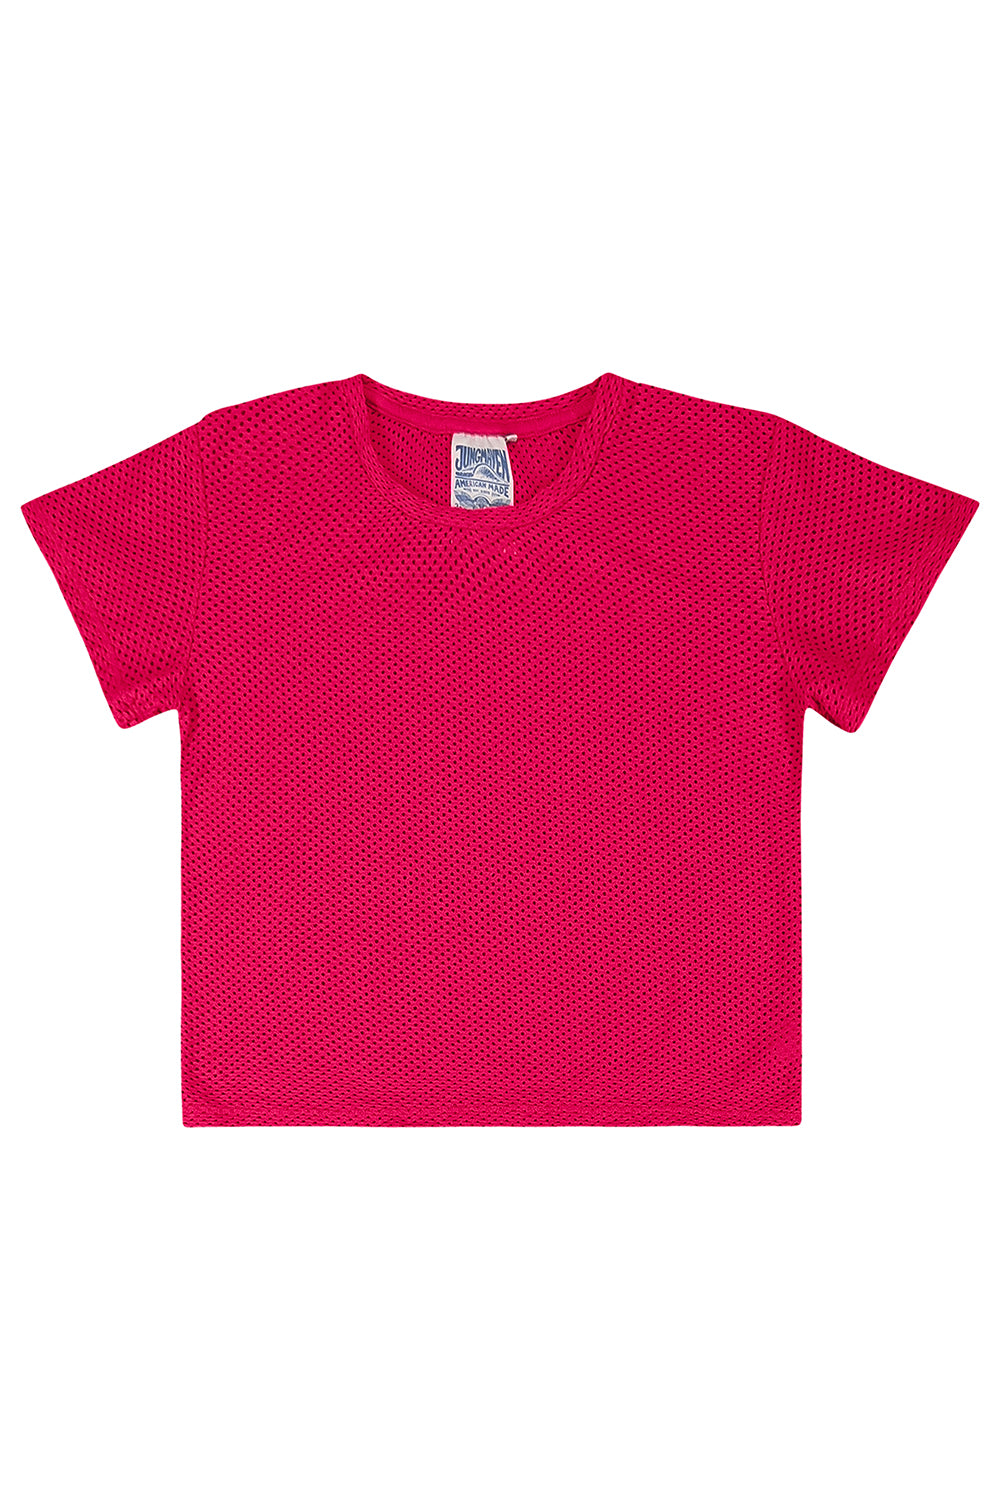 Carmen Mesh Cropped Tee | Jungmaven Hemp Clothing & Accessories / Color: Pink Grapefruit